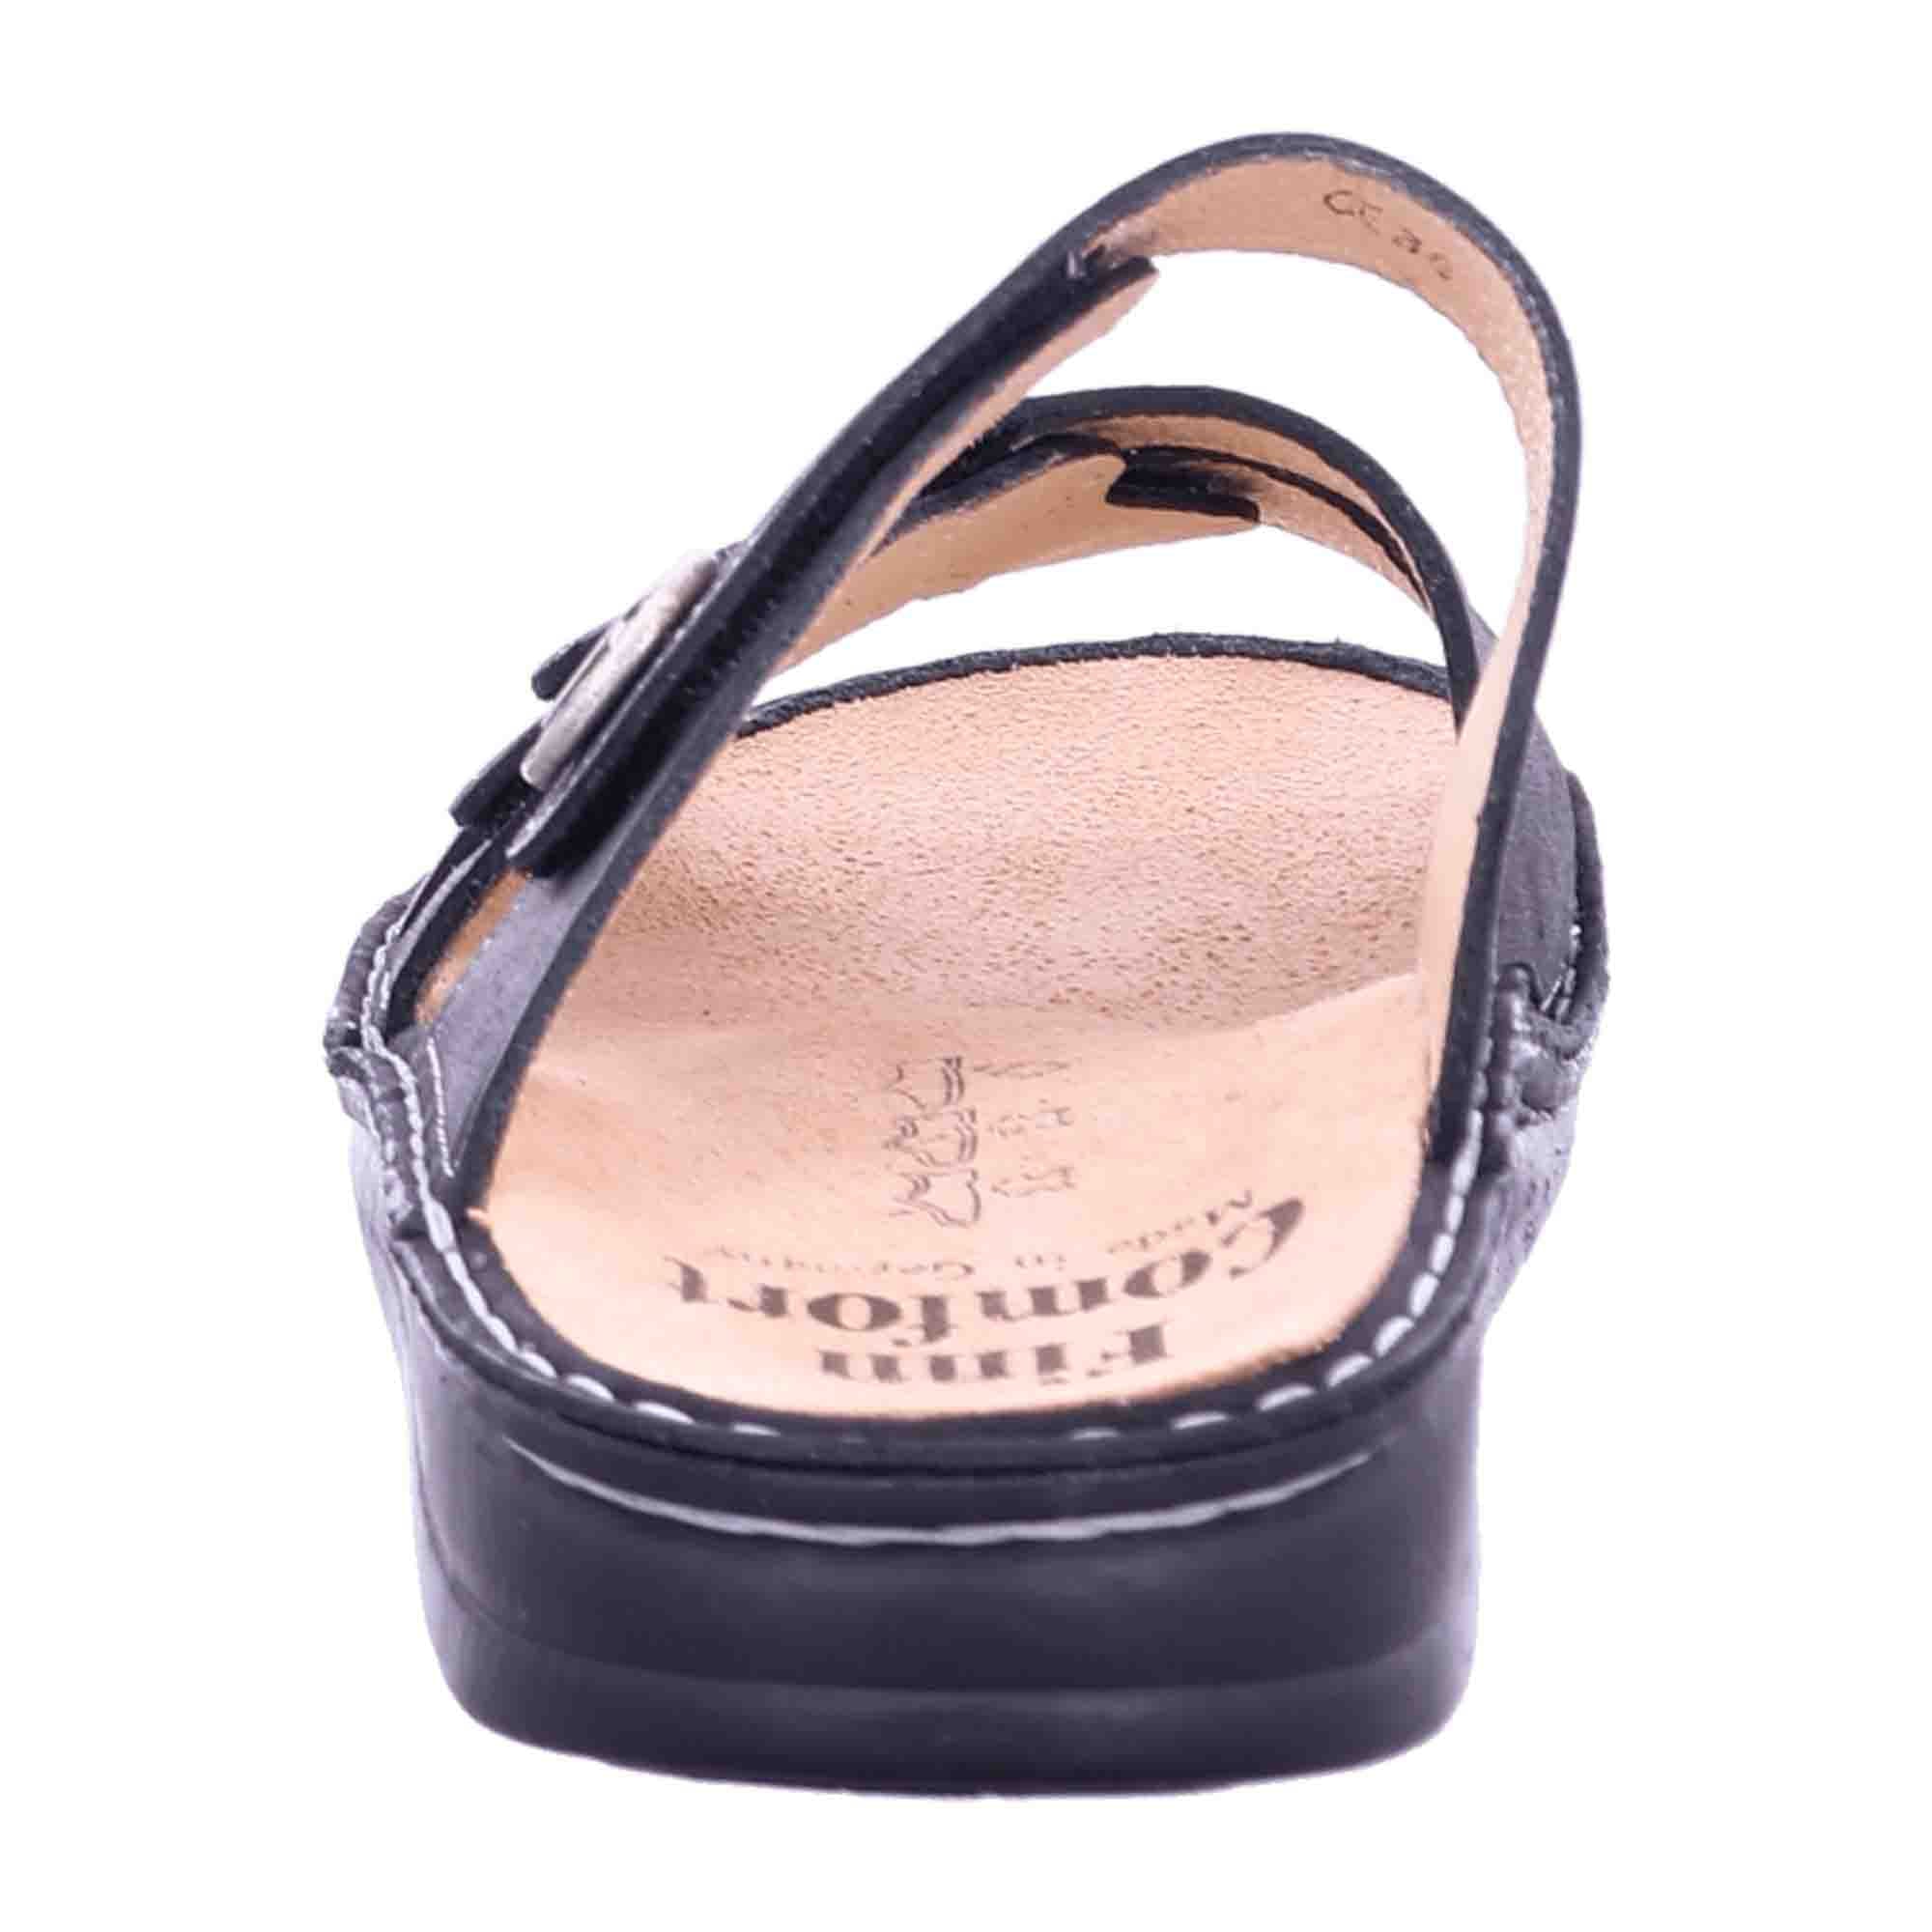 Finn Comfort Agueda Women's Black Comfort Shoes - Stylish & Durable